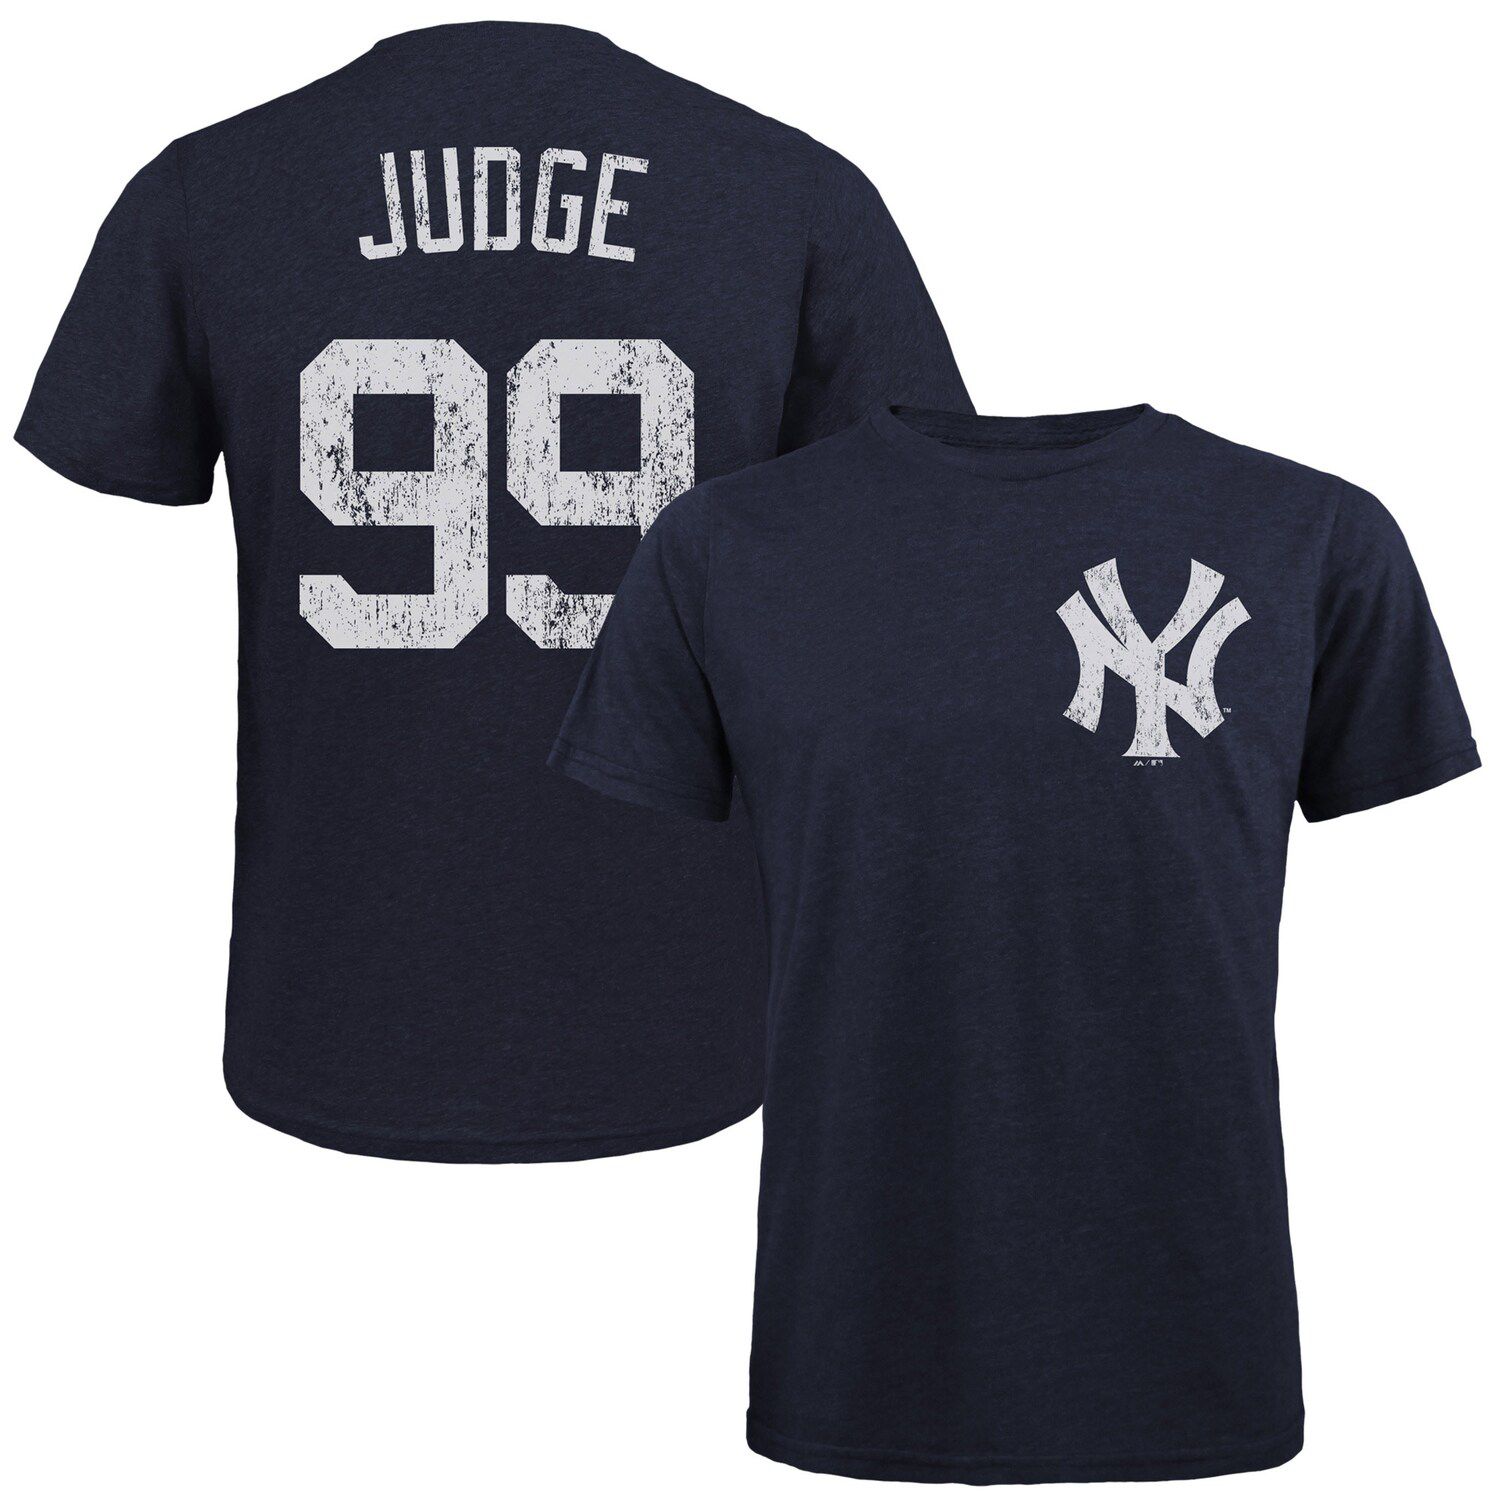 judge t shirt